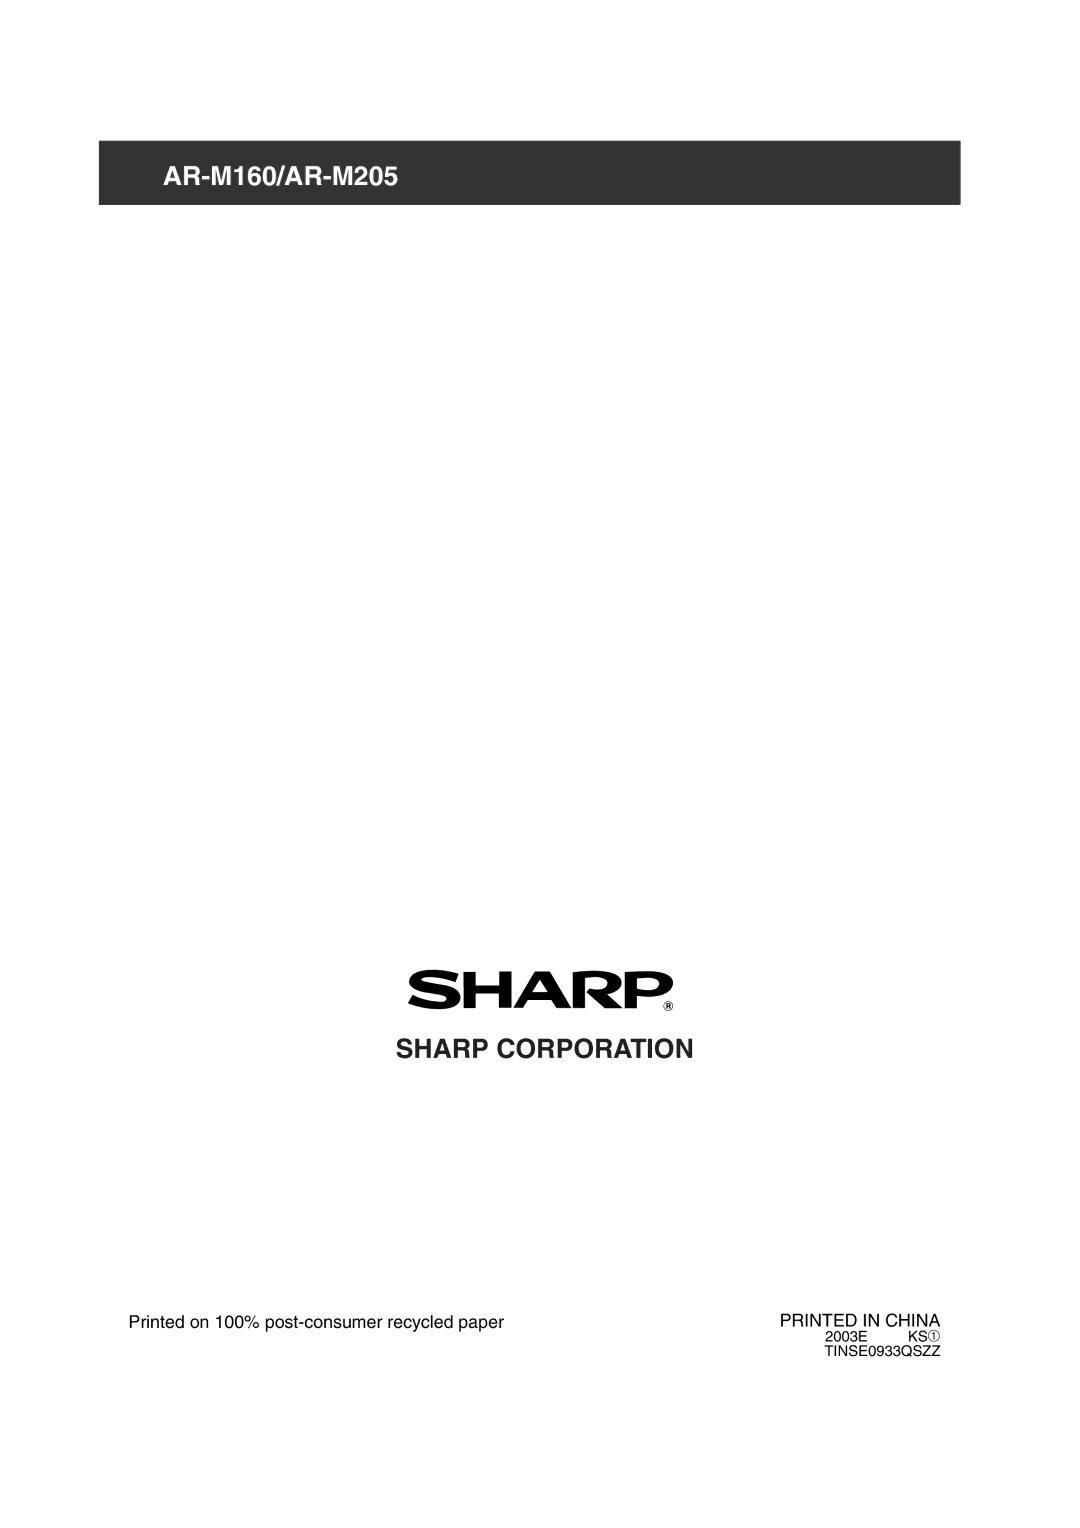 Sharp AR-M205, AR-M160 setup guide Sharp Corporation 